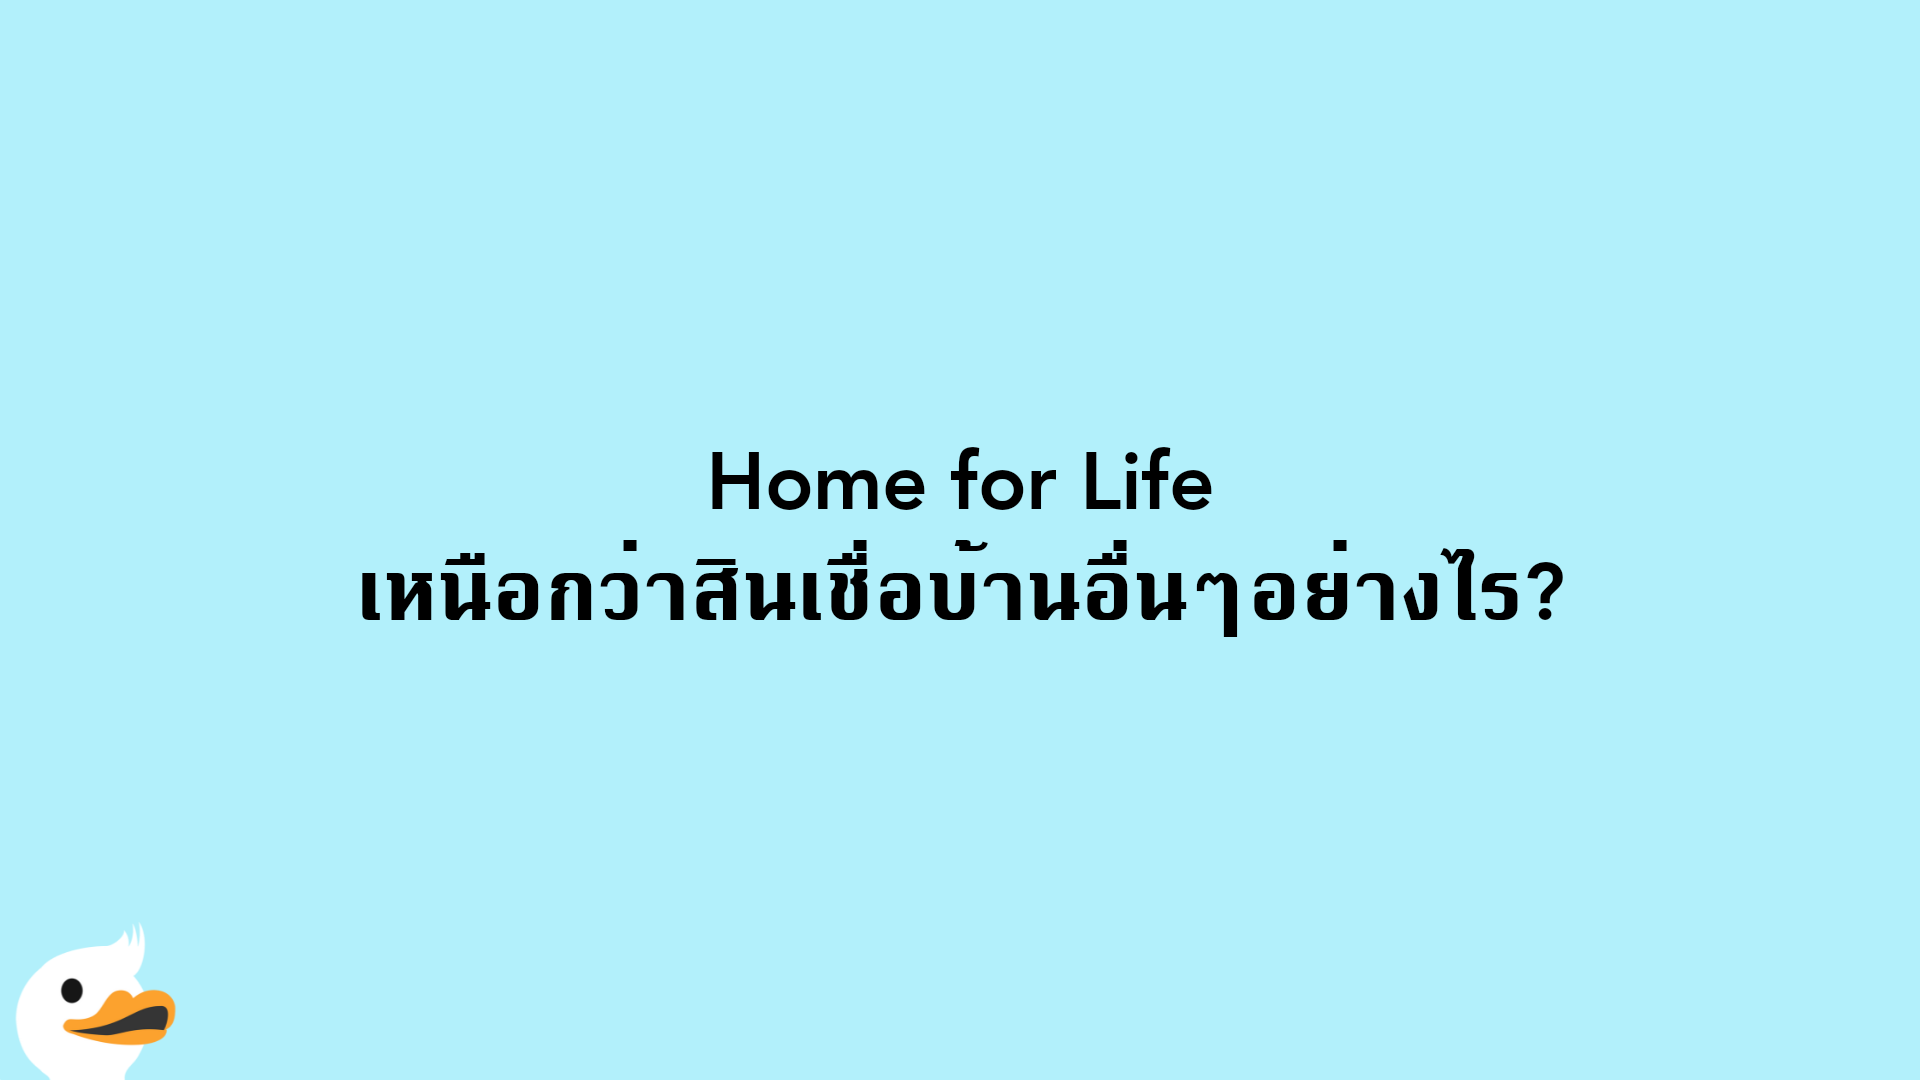 Home for Life เหนือกว่าสินเชื่อบ้านอื่นๆอย่างไร?